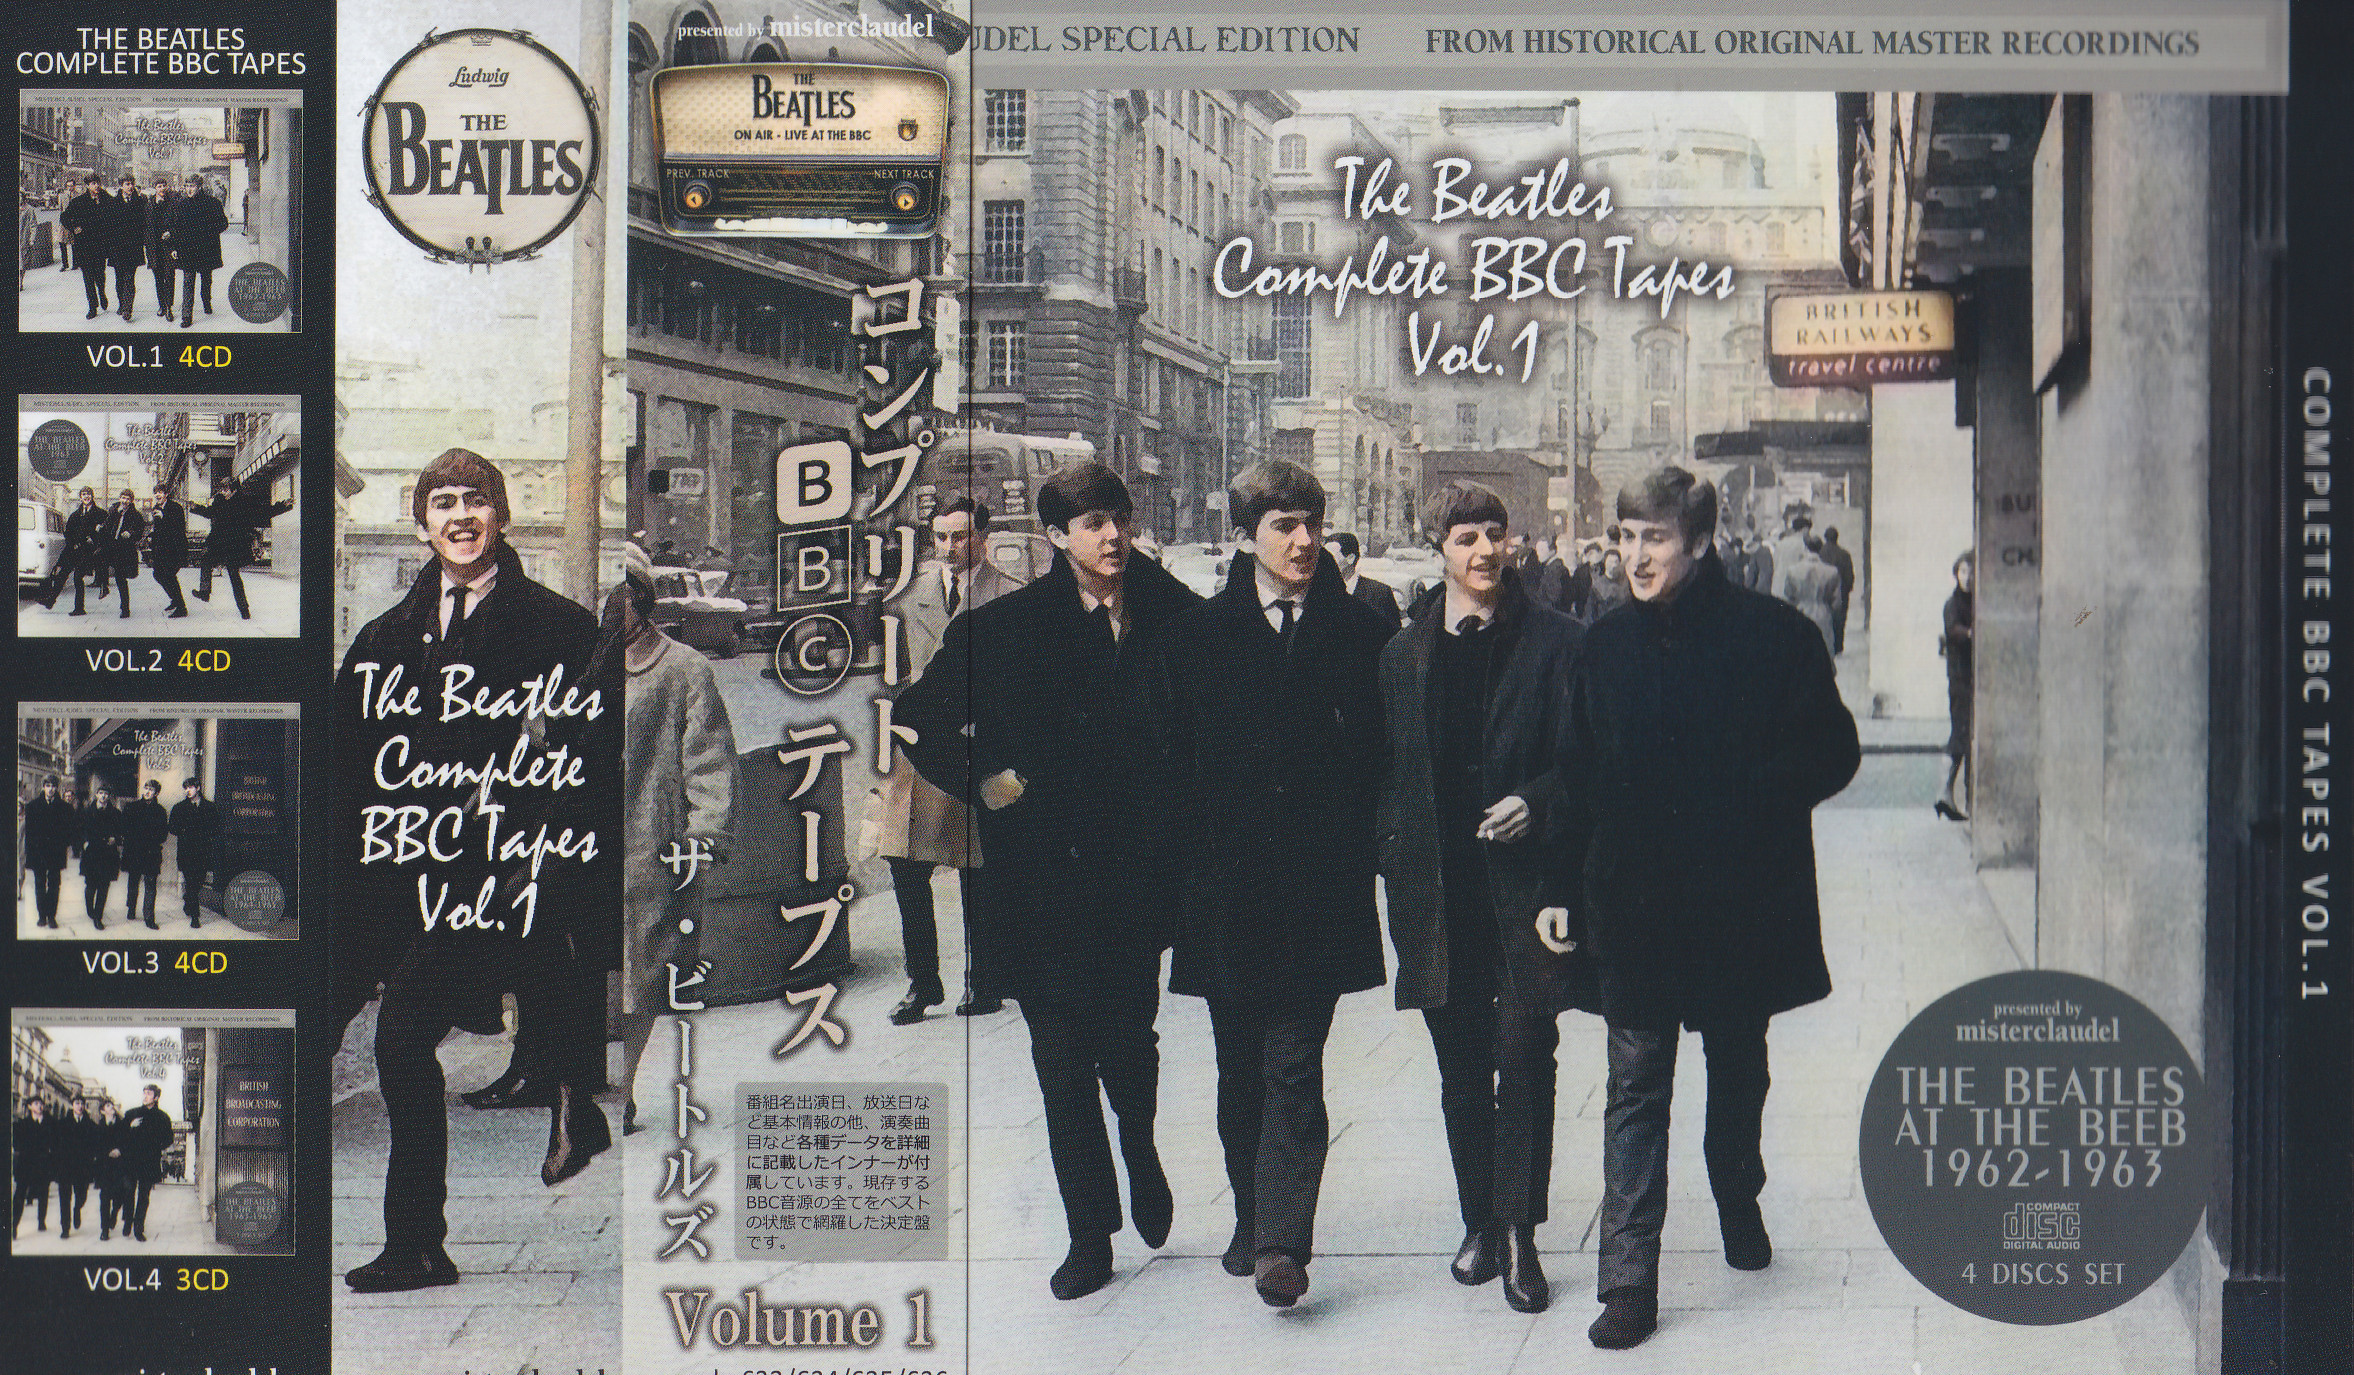 Beatles / Complete BBC Tapes Vol 1 / 4CD Wx OBI Strip + Book